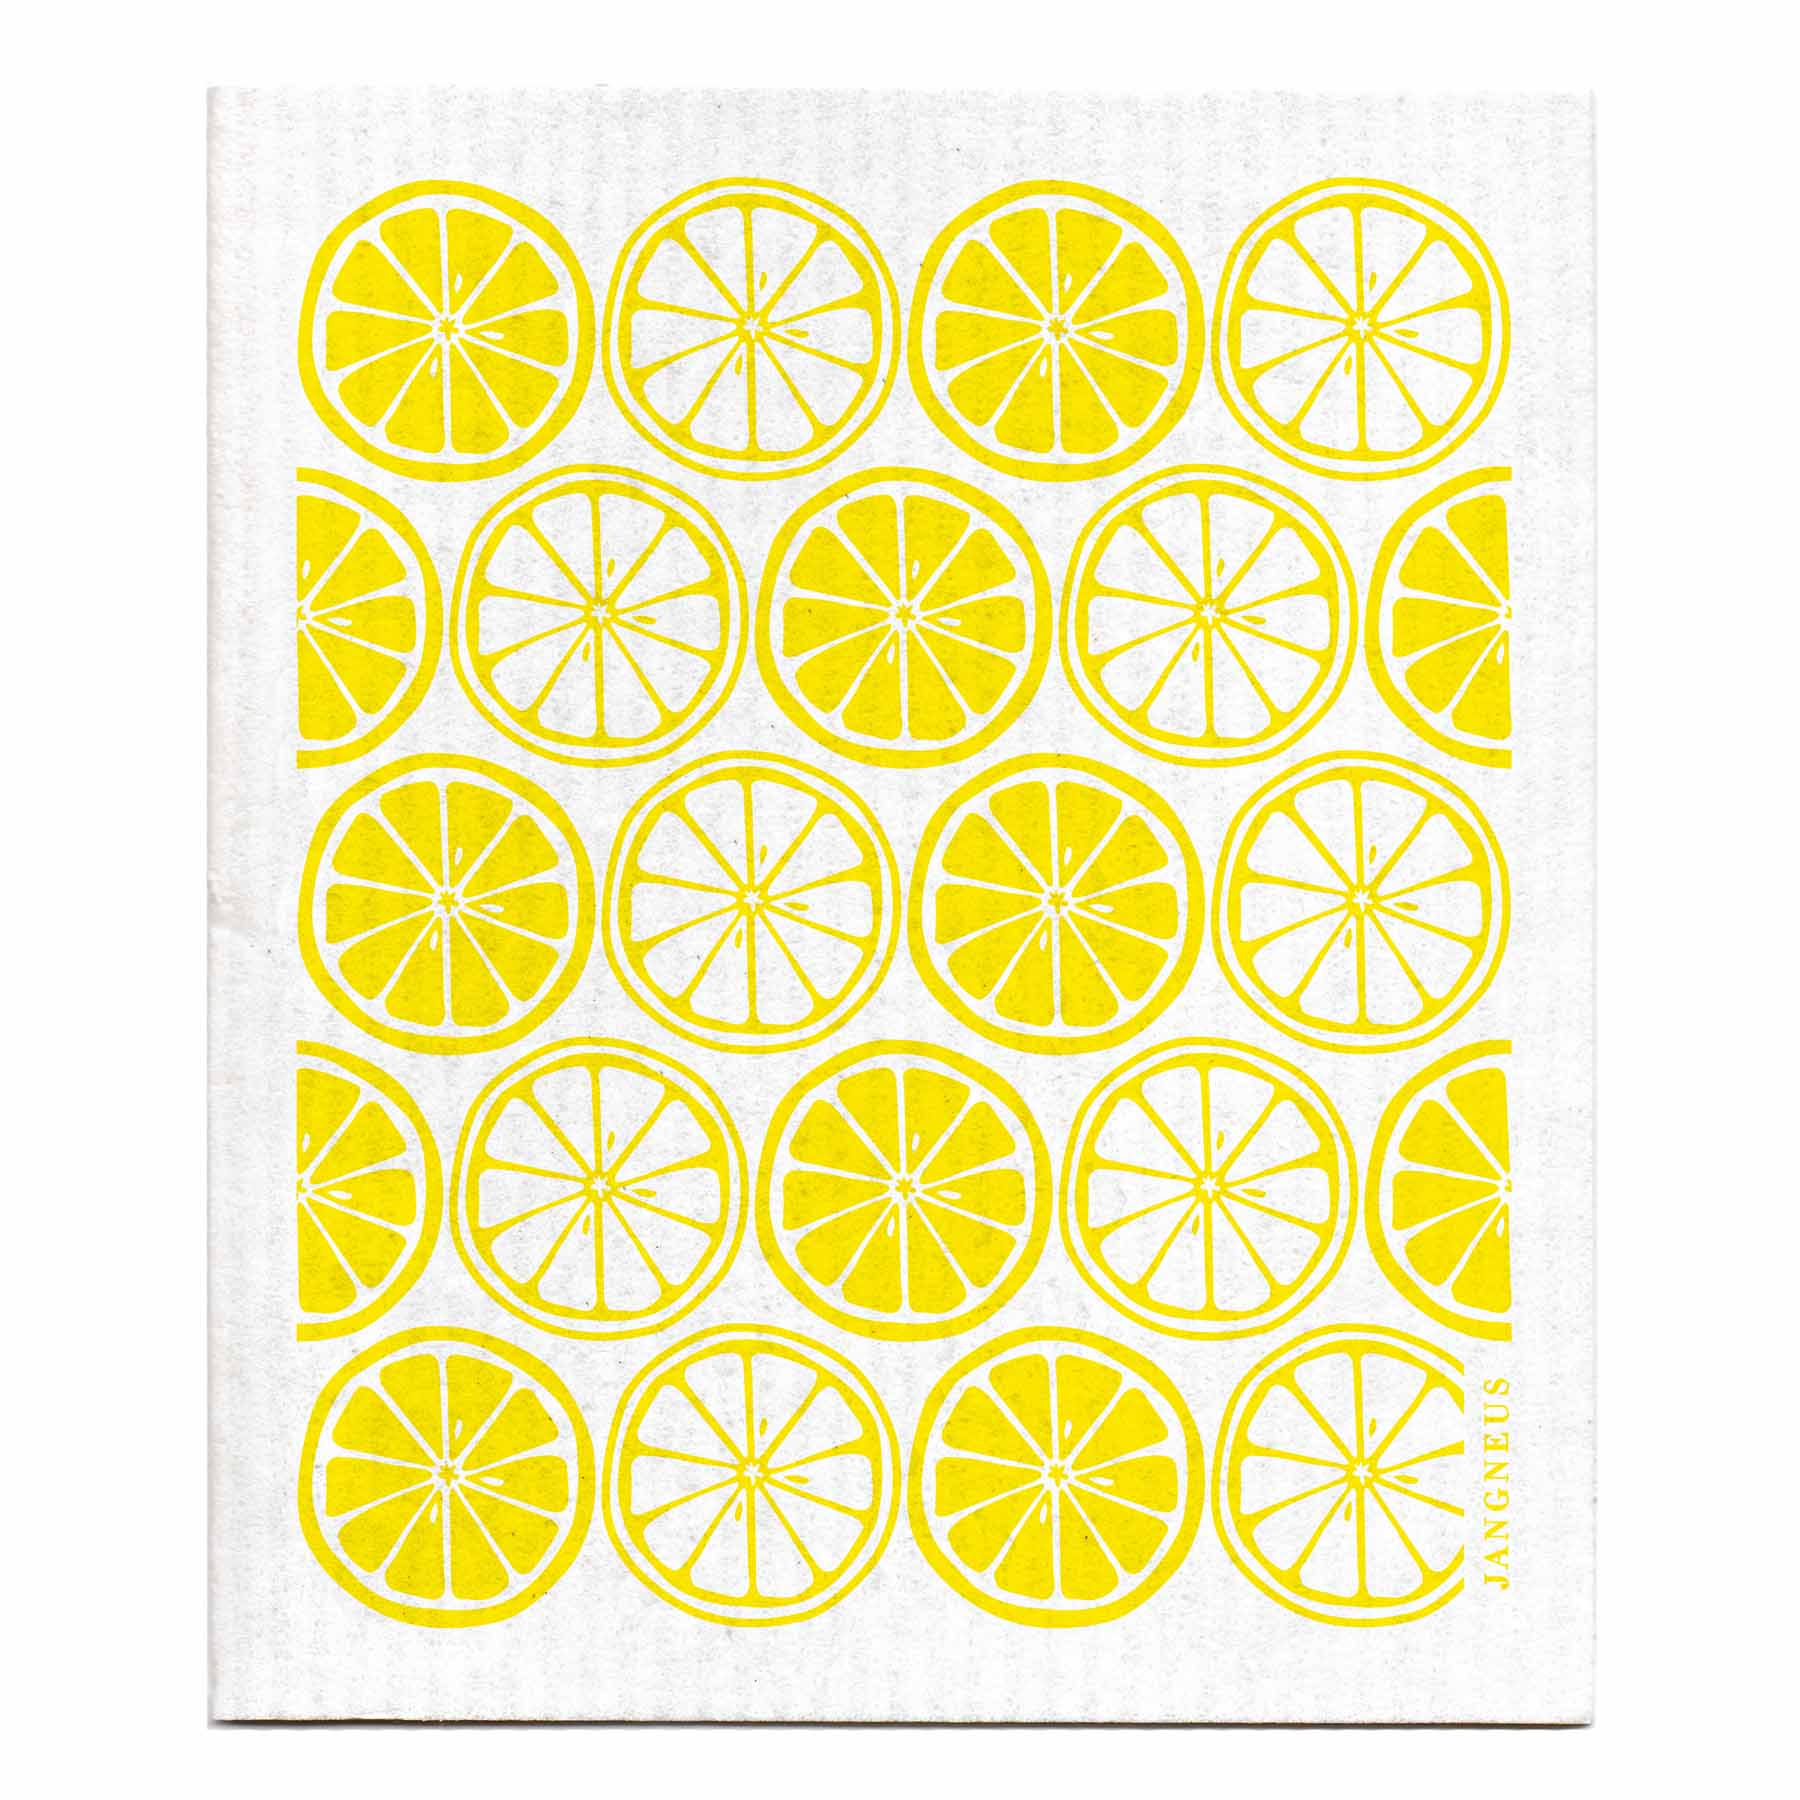 Compostable Swedish Dishcloth - Citrus Yellow by Jangneus